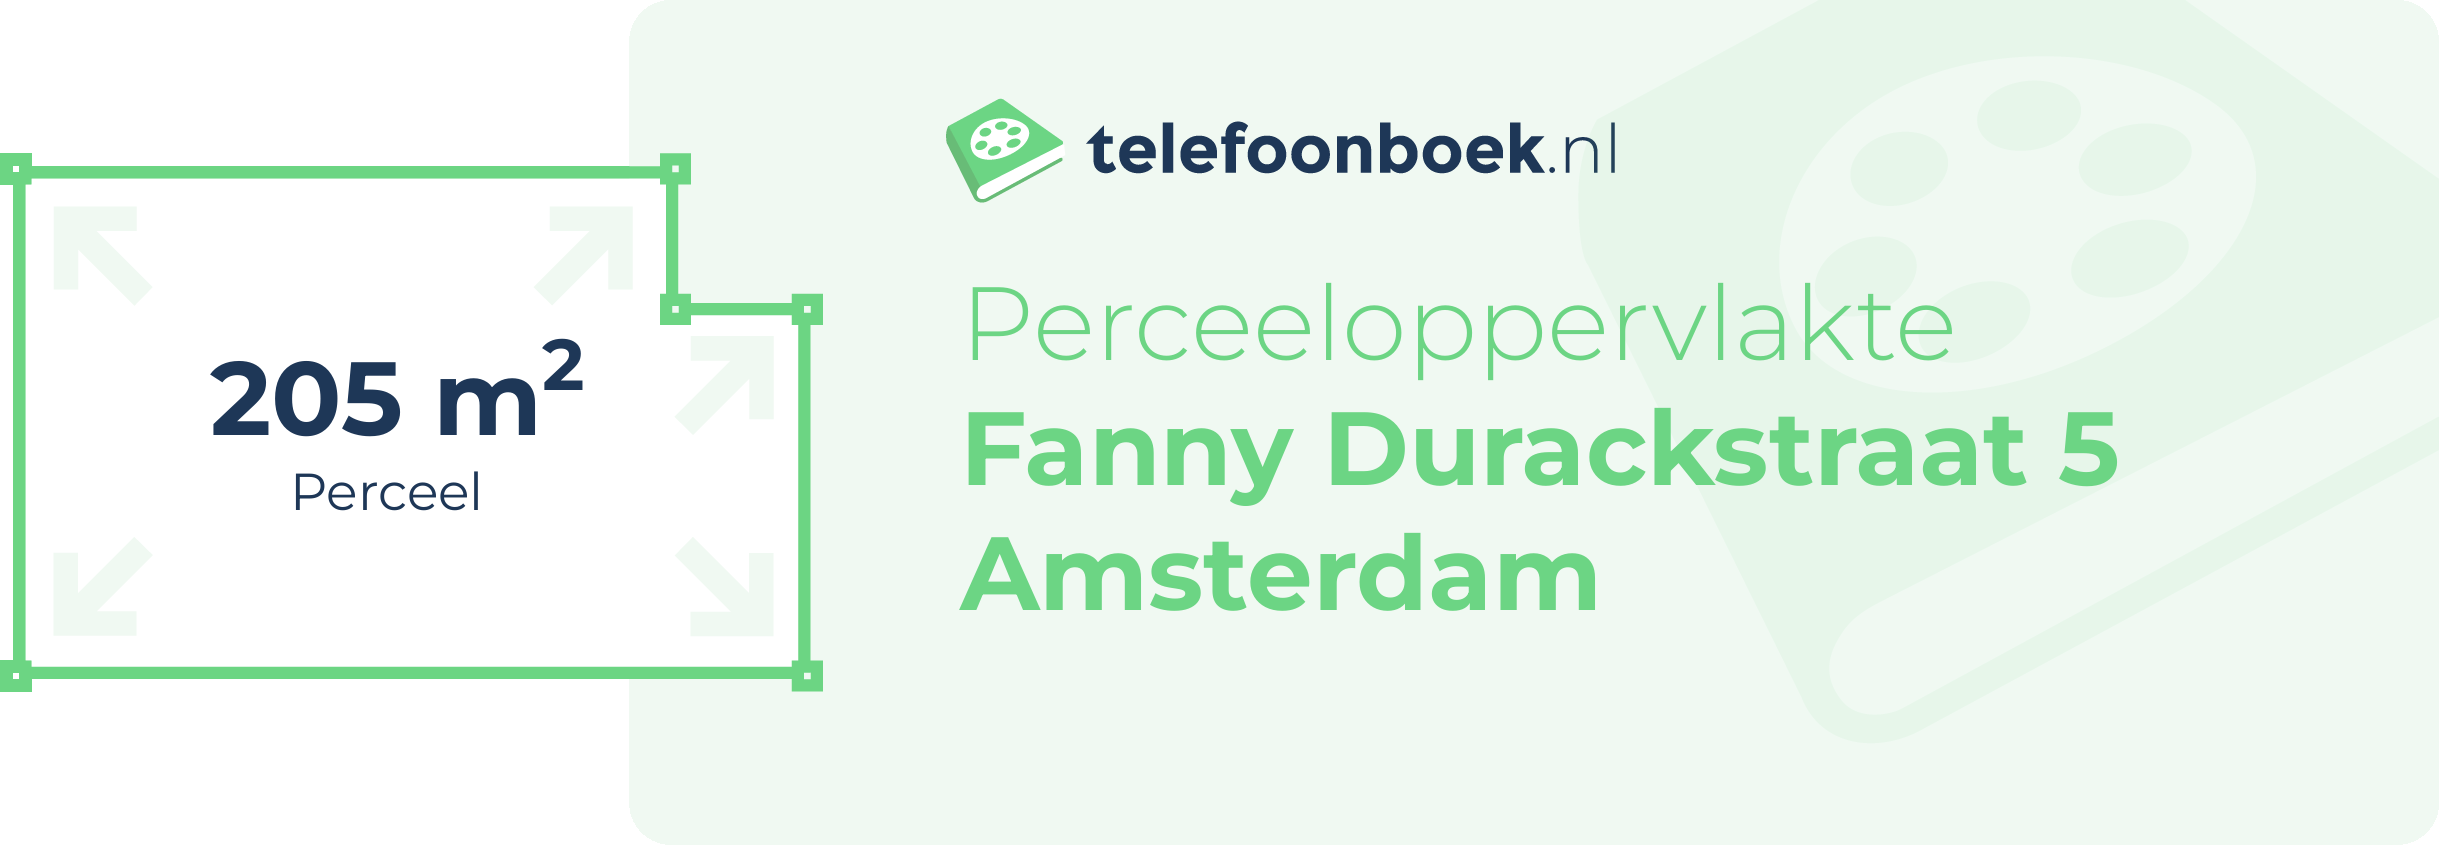 Perceeloppervlakte Fanny Durackstraat 5 Amsterdam